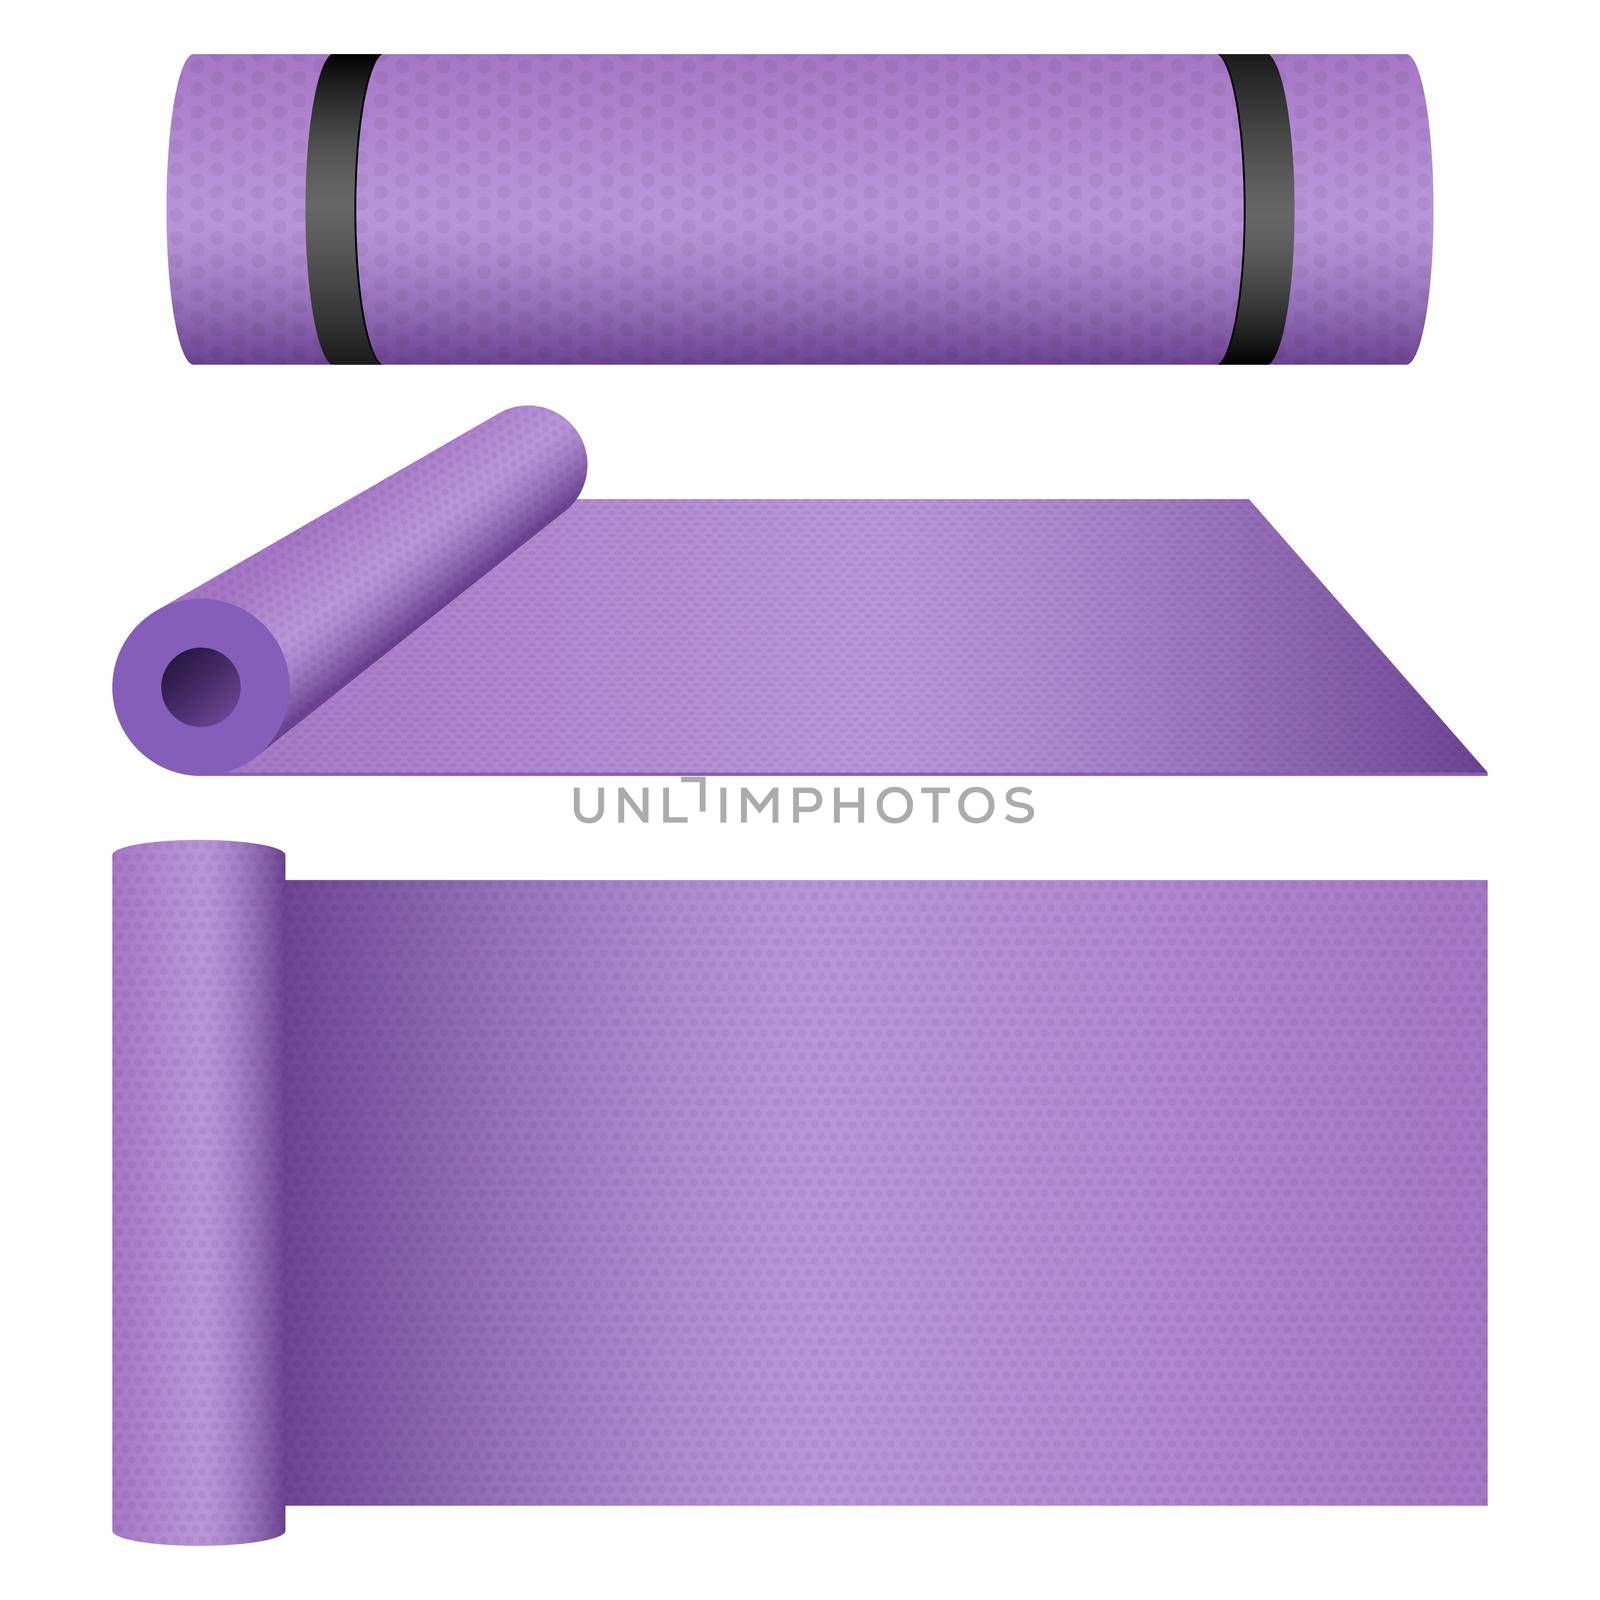 Yoga mat vector design illustration isolated on white background by emiltimplaru